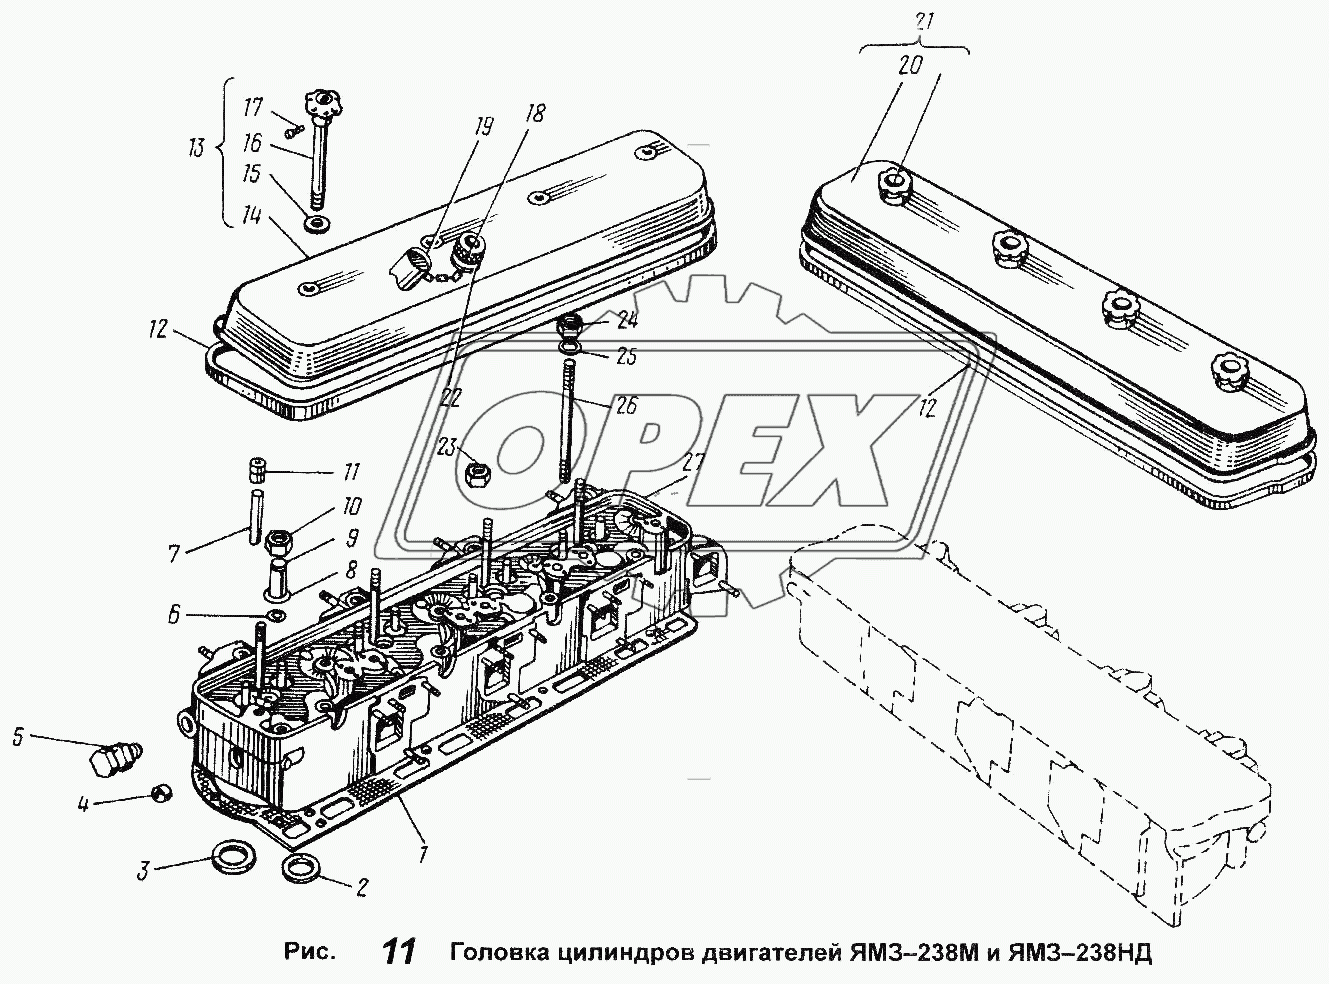 Головка цилиндров двигателей ЯМЗ-238М и ЯМЗ-238НД